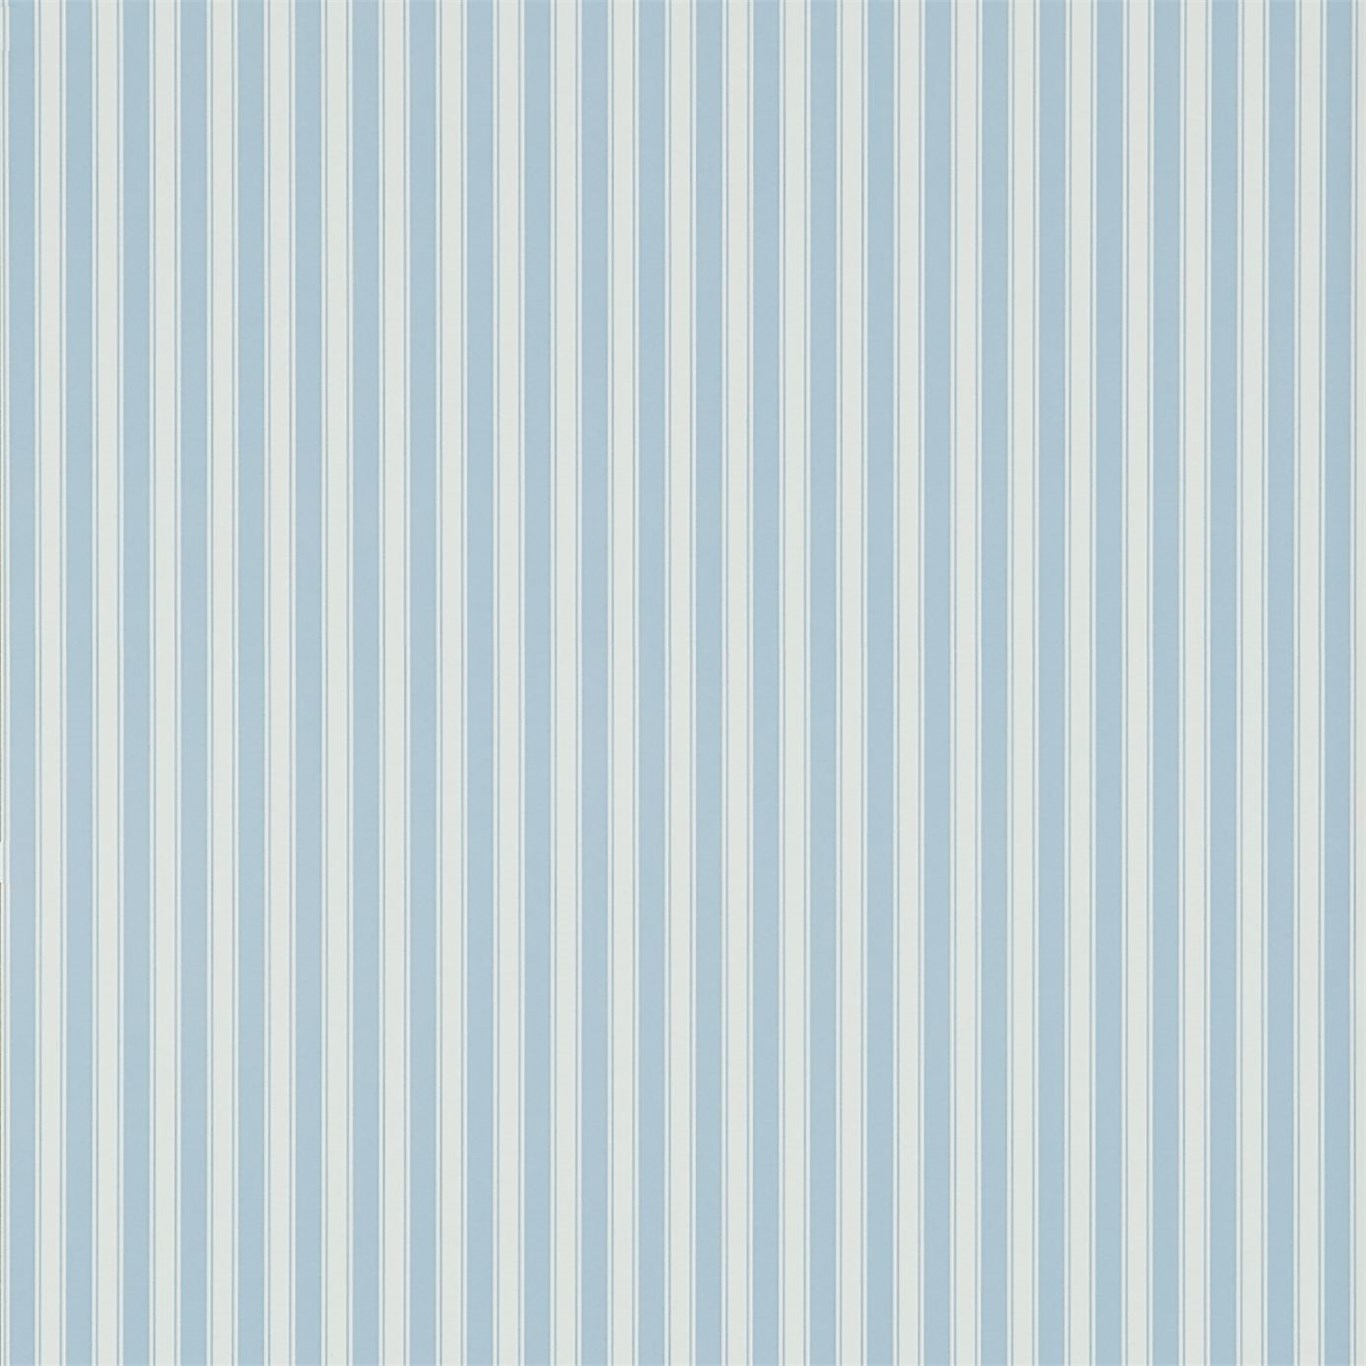 Wallpaper - Sanderson Caverley Wallpapers New Tiger Stripe Blue/Ivory